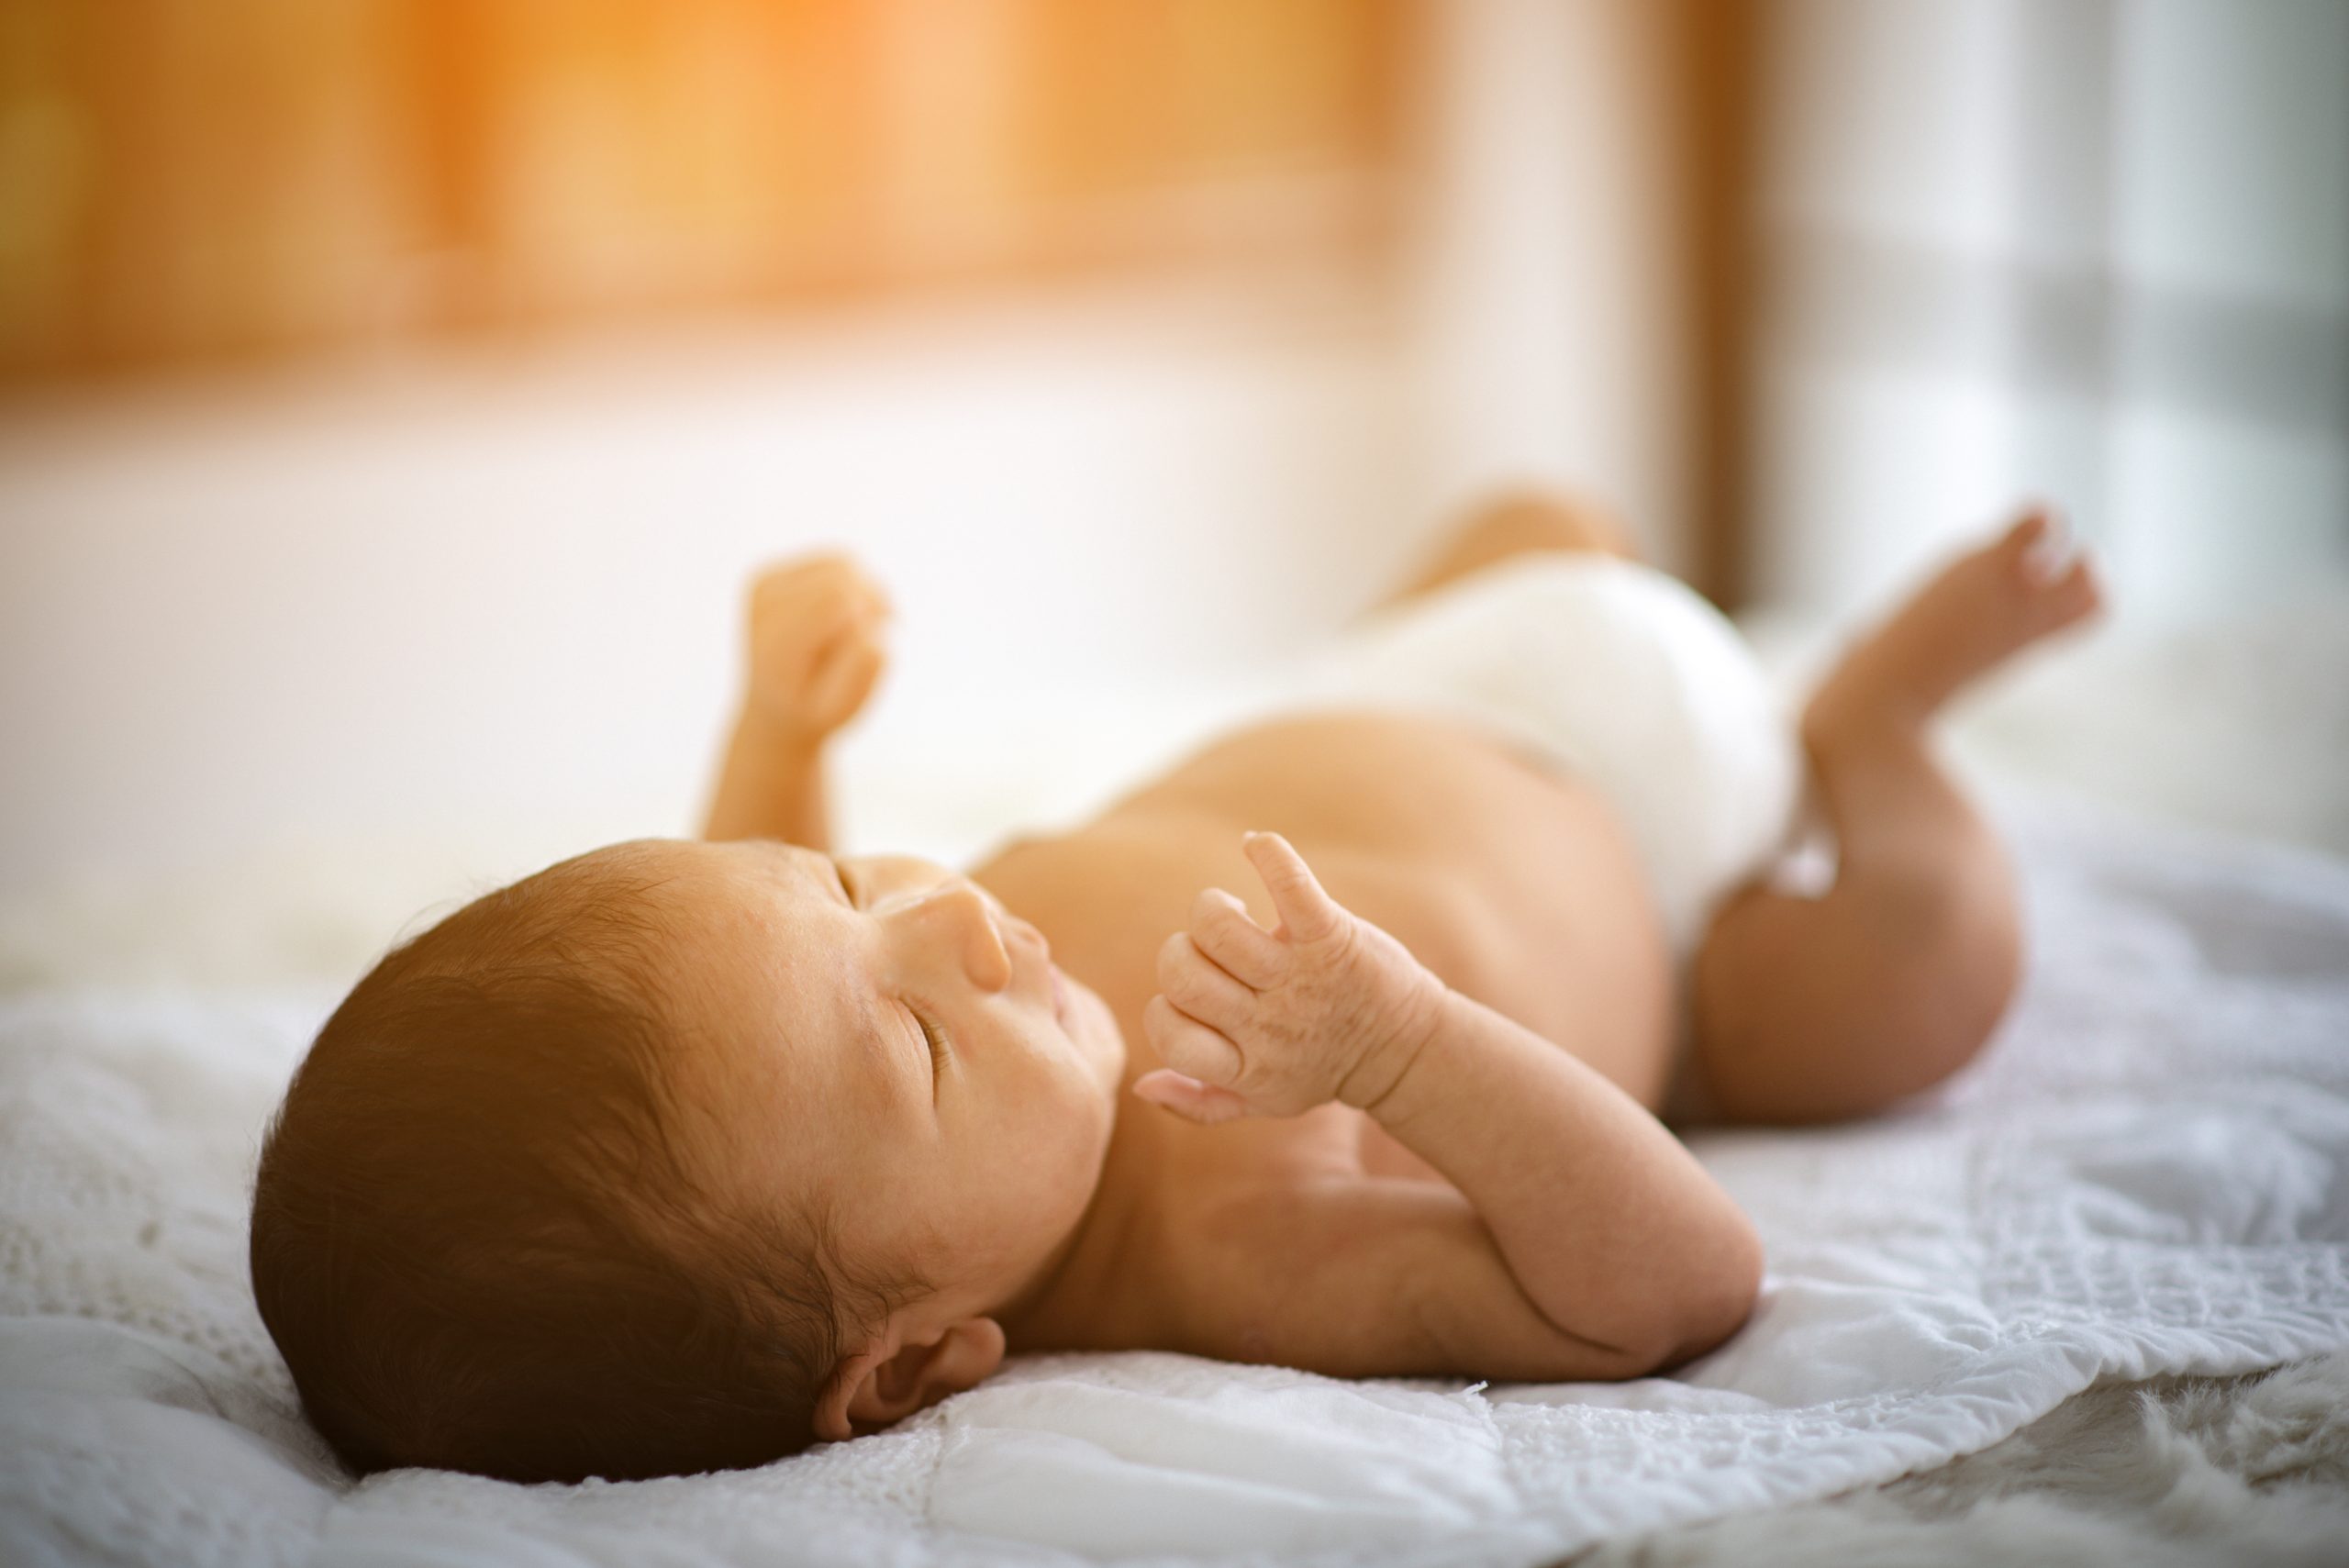 newborn baby lying on bed with light shining through window